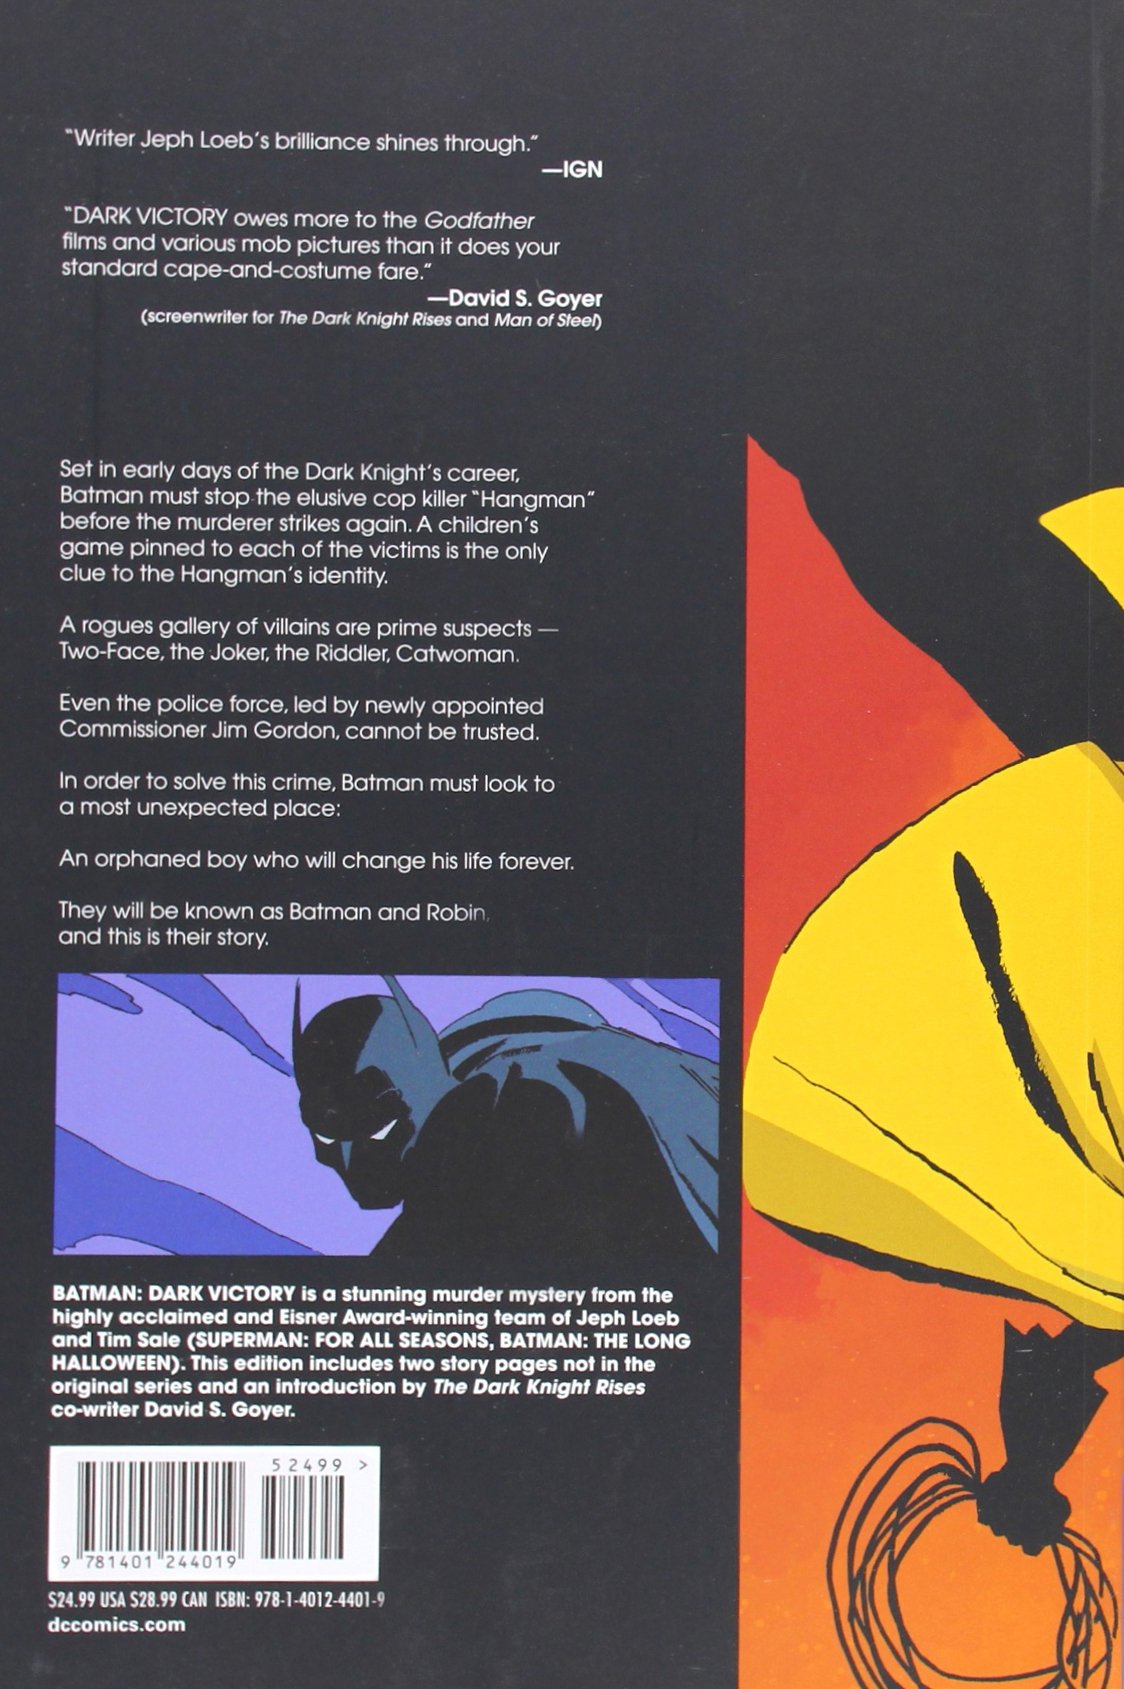 High Resolution Wallpaper | Batman: Dark Victory 1124x1689 px